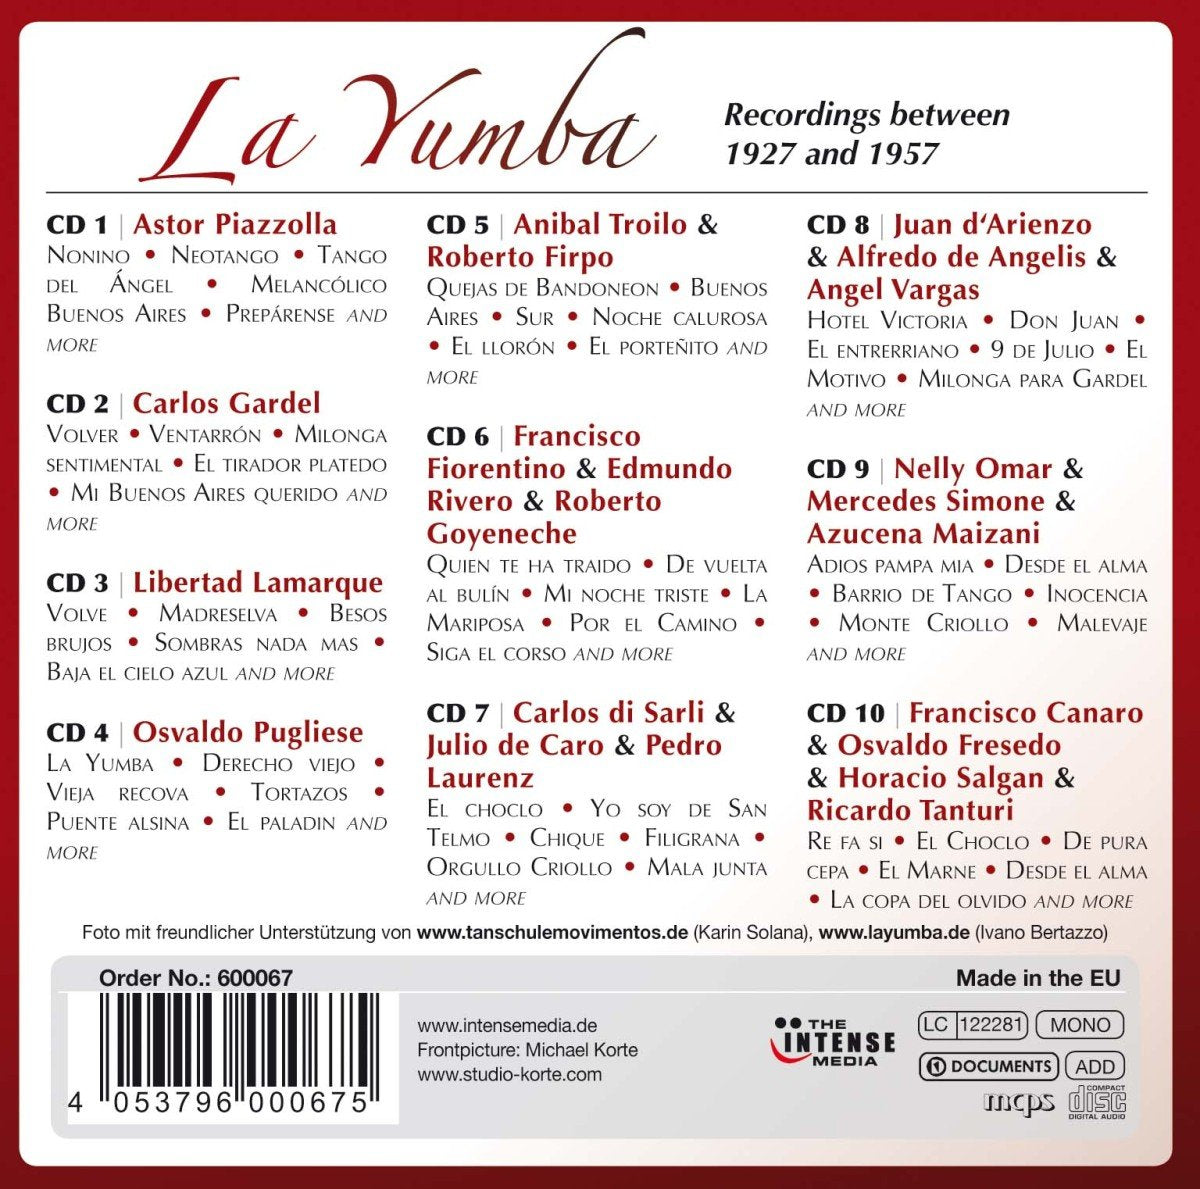 La Yumba - The Greatest Tango Performers (10 CDs)